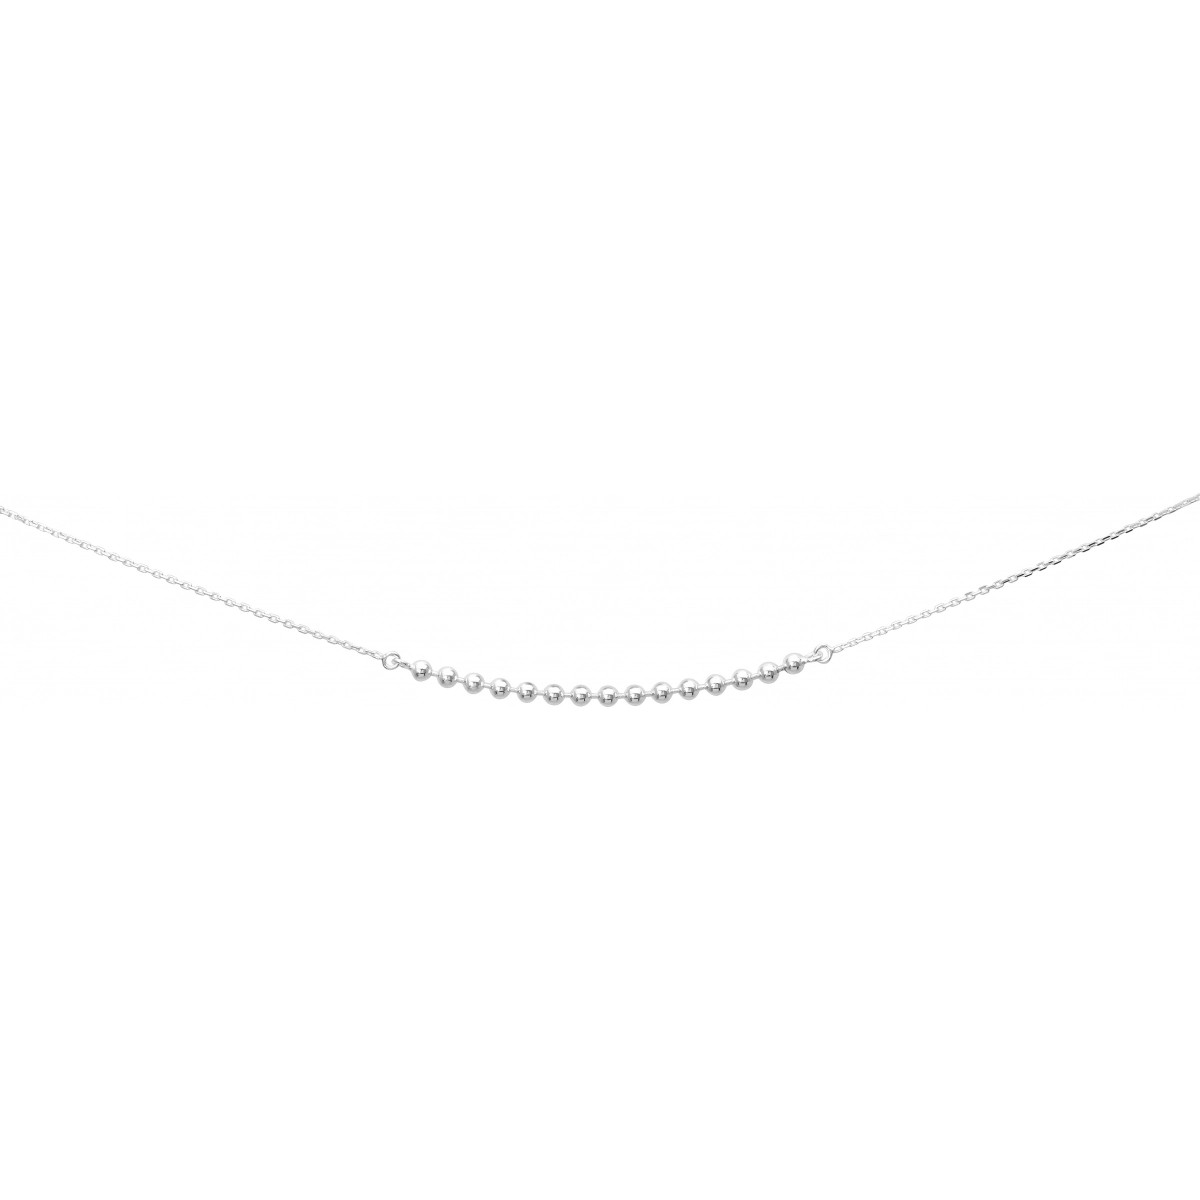 Necklace rh925 Silver - Size: 42  Lua Blanca  332172.42